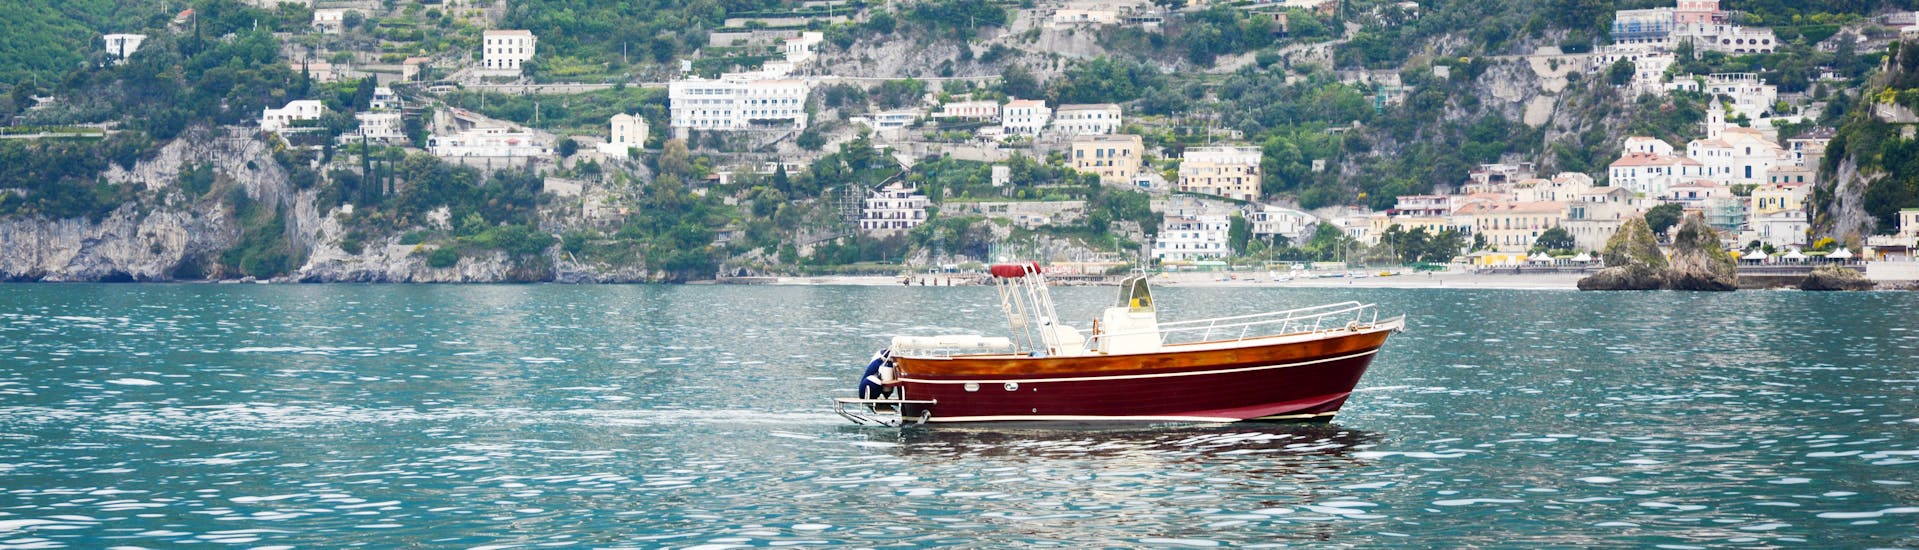 The boat of Blu Mediterraneo Amalfi Coast during the Boat Trip from Salerno along the Amalfi Coast.